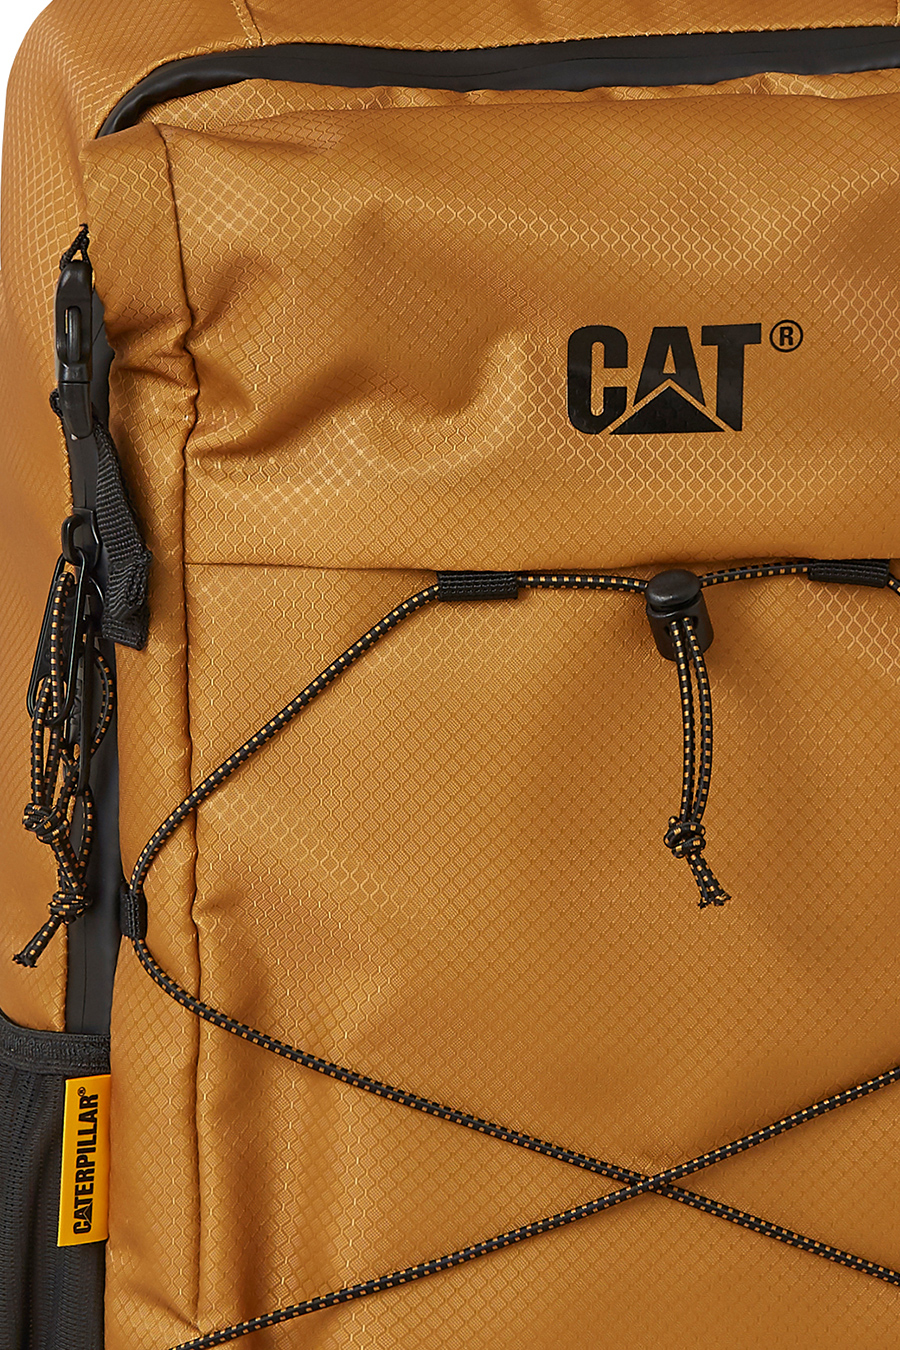 Backpack CAT 84438-547